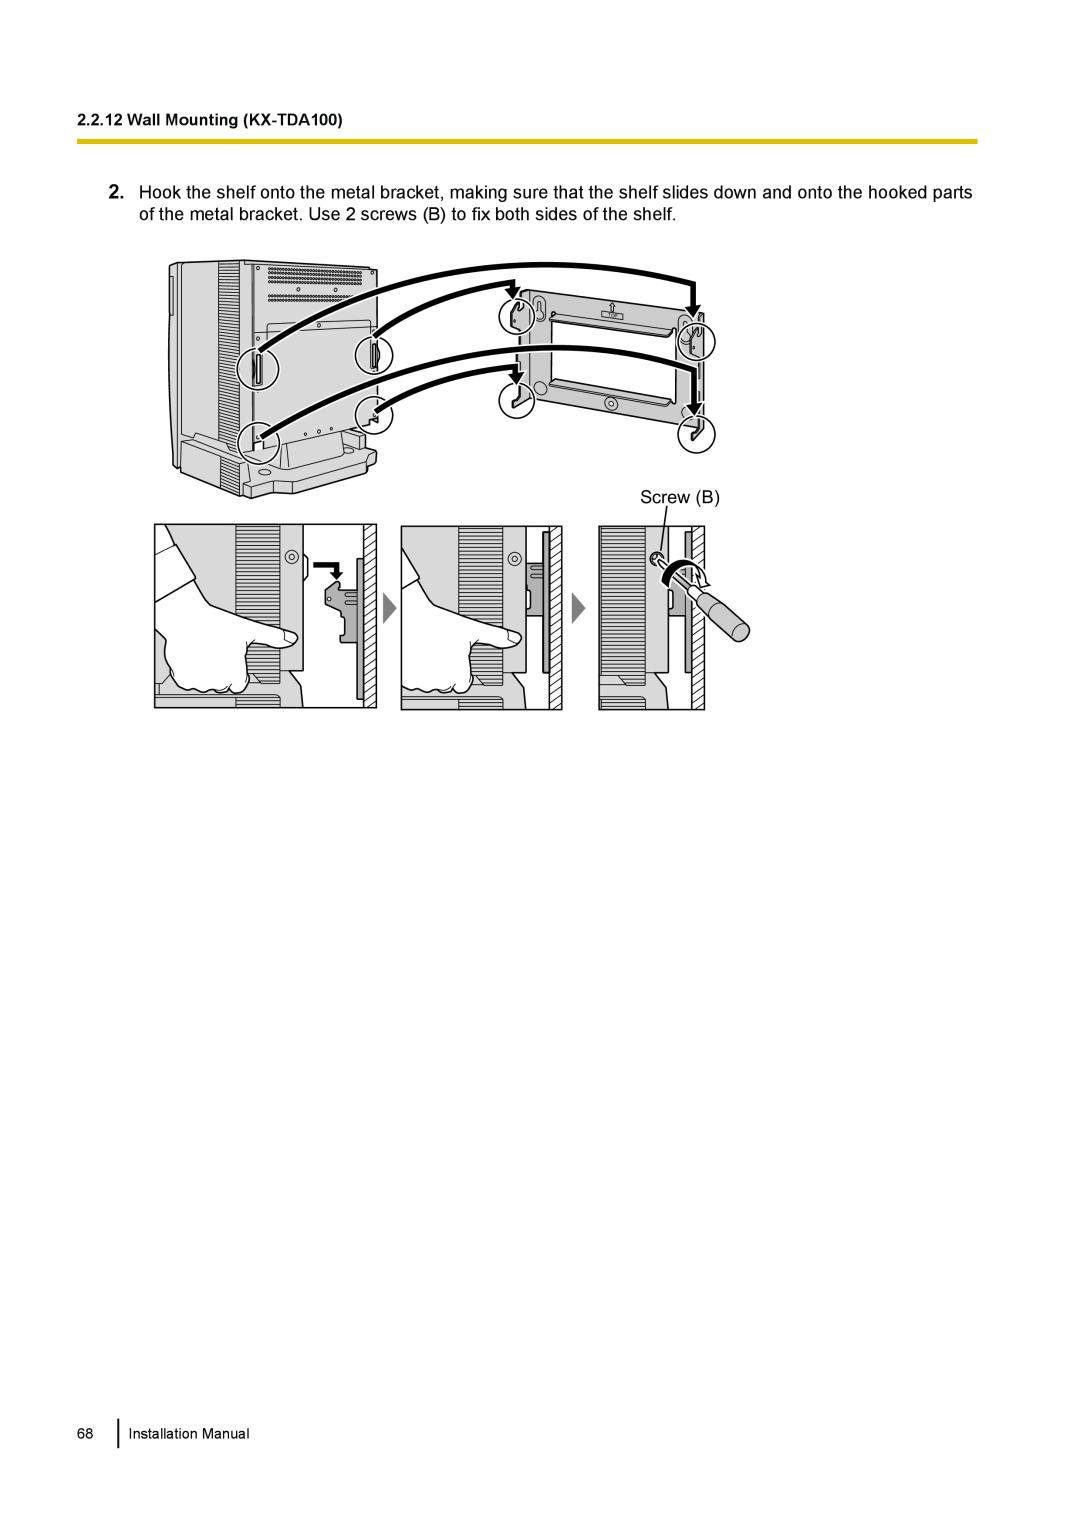 Panasonic installation manual Screw B, Wall Mounting KX-TDA100 